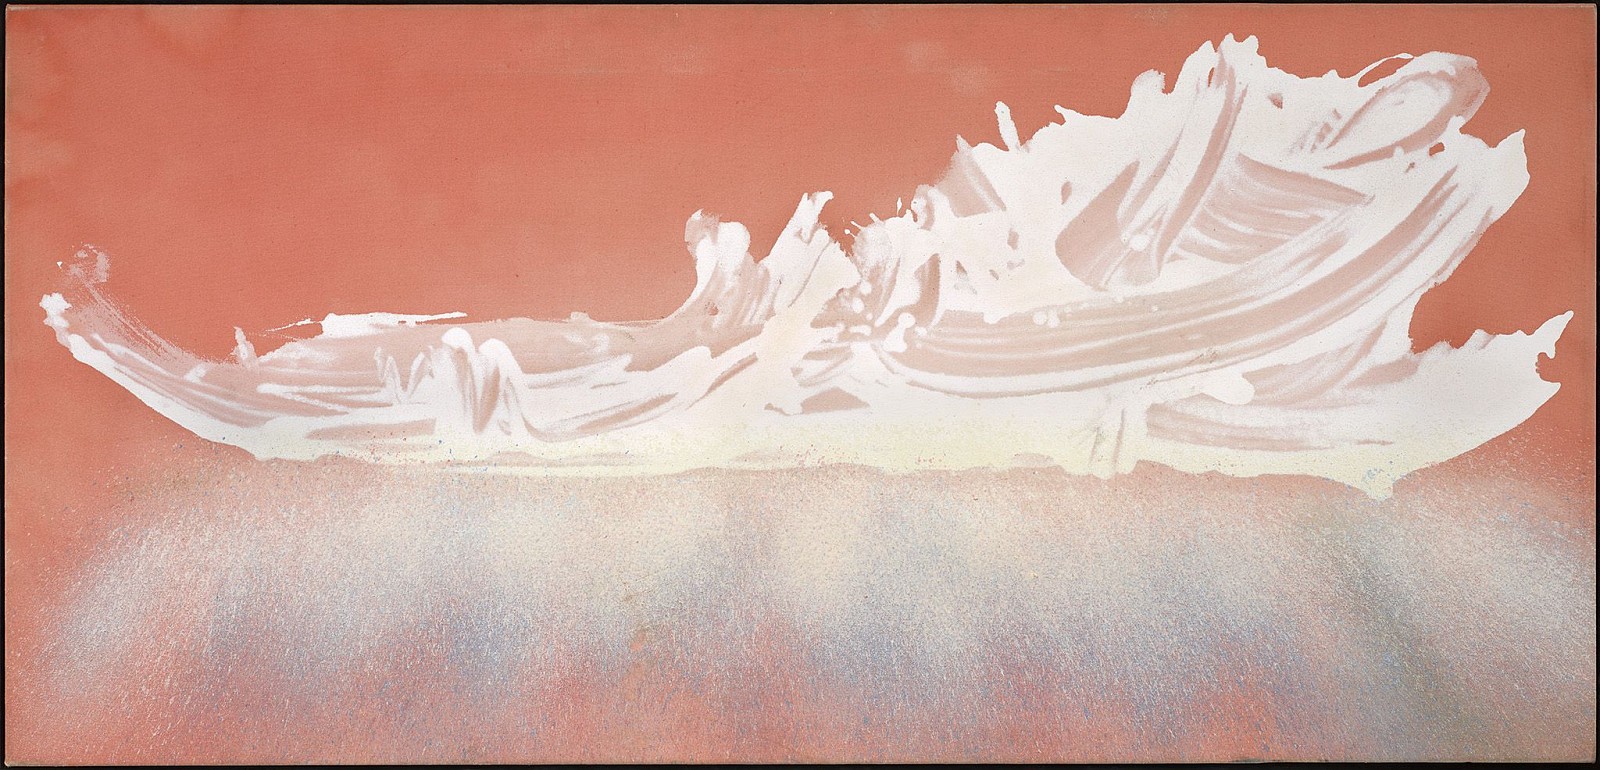 Dan Christensen, Lady Killer, 1978
Acrylic on canvas, 33 x 64 in. (83.8 x 162.6 cm)
CHR-00003